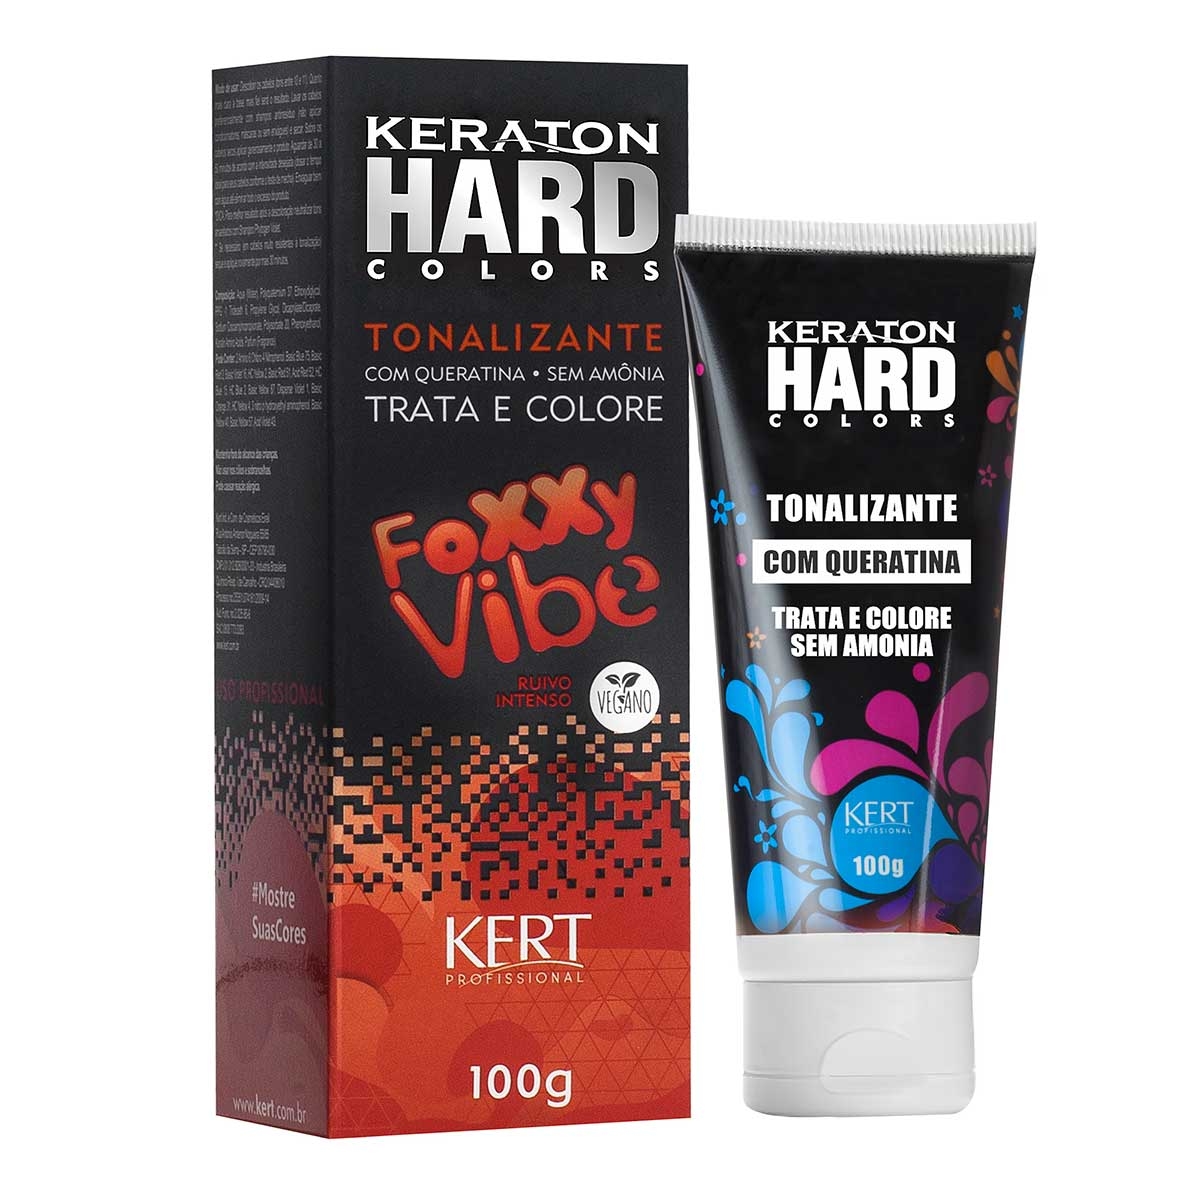 Tonalizante Keraton Hard Colors Foxxy Vibe com 100g 100g